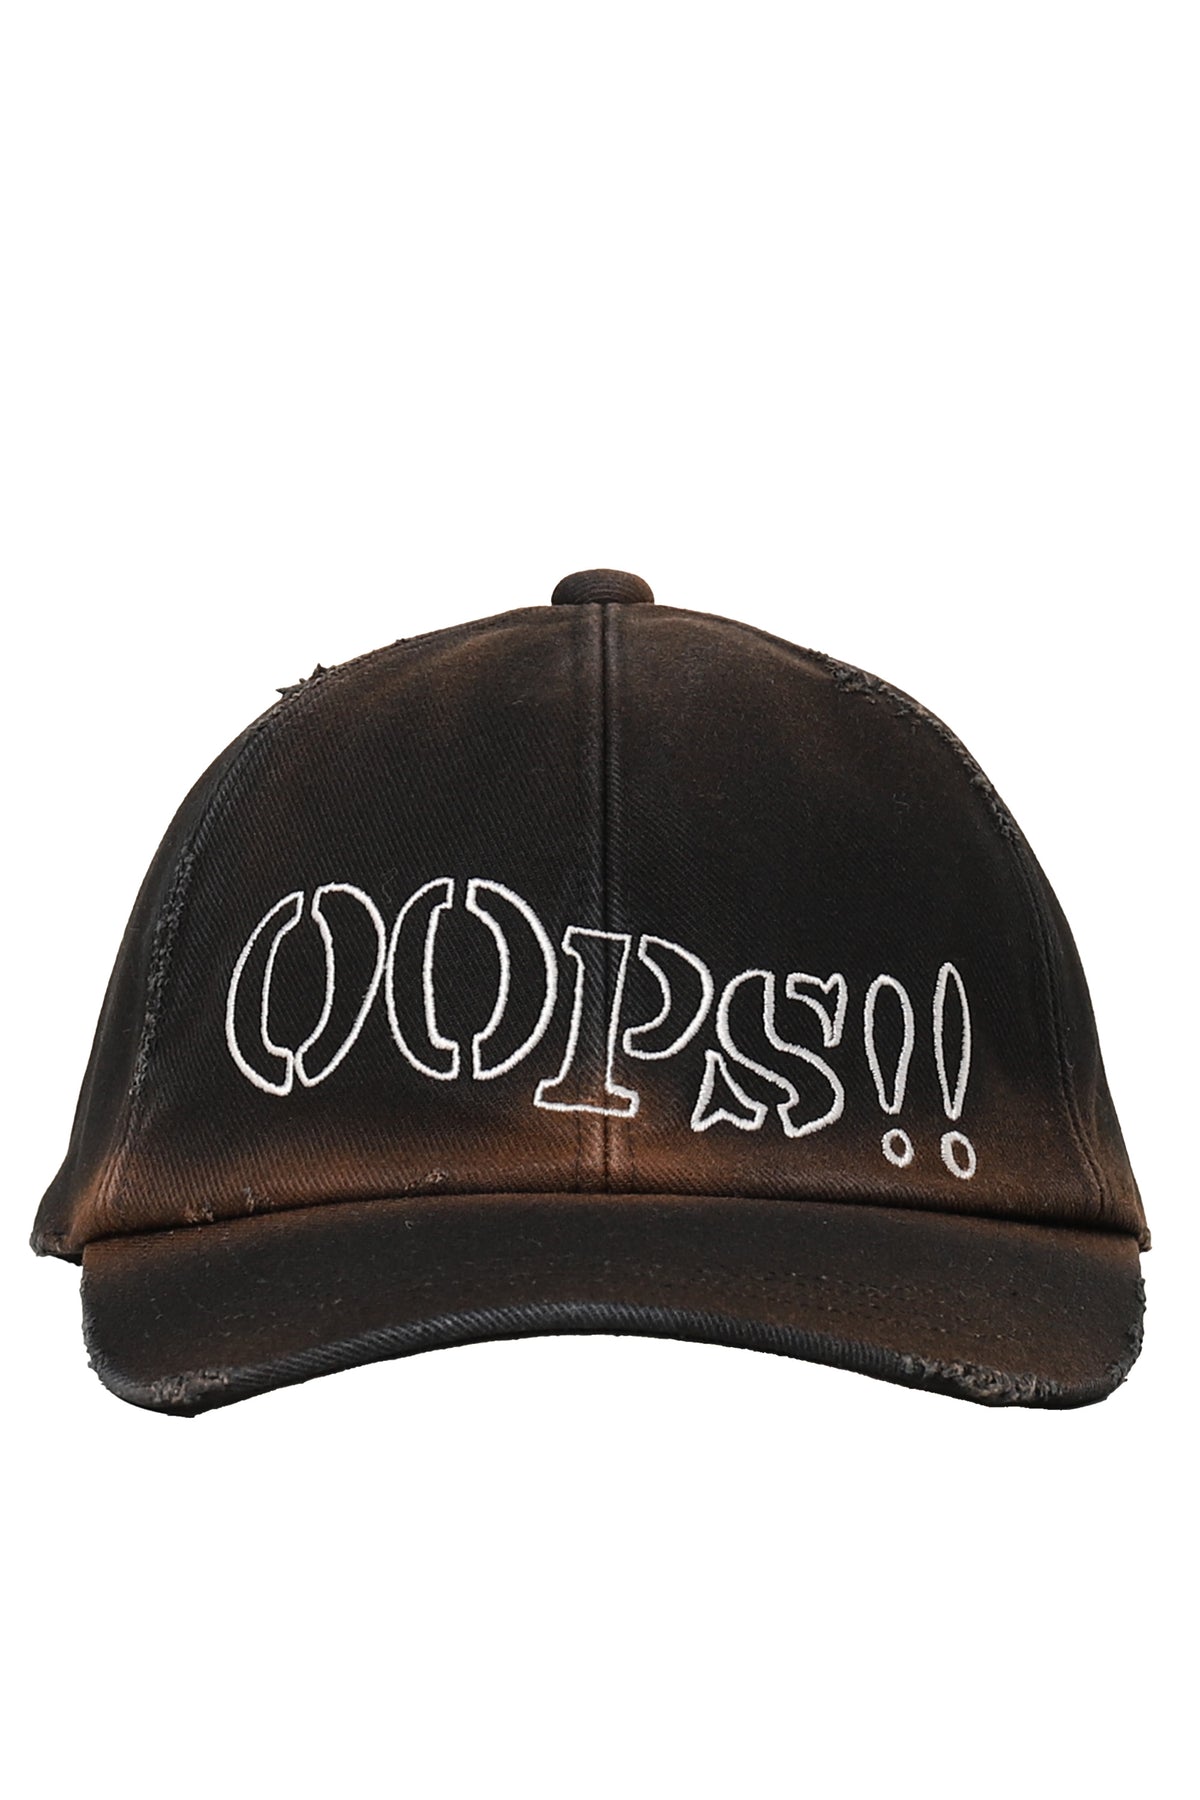 OOPS!! CAP / BLK